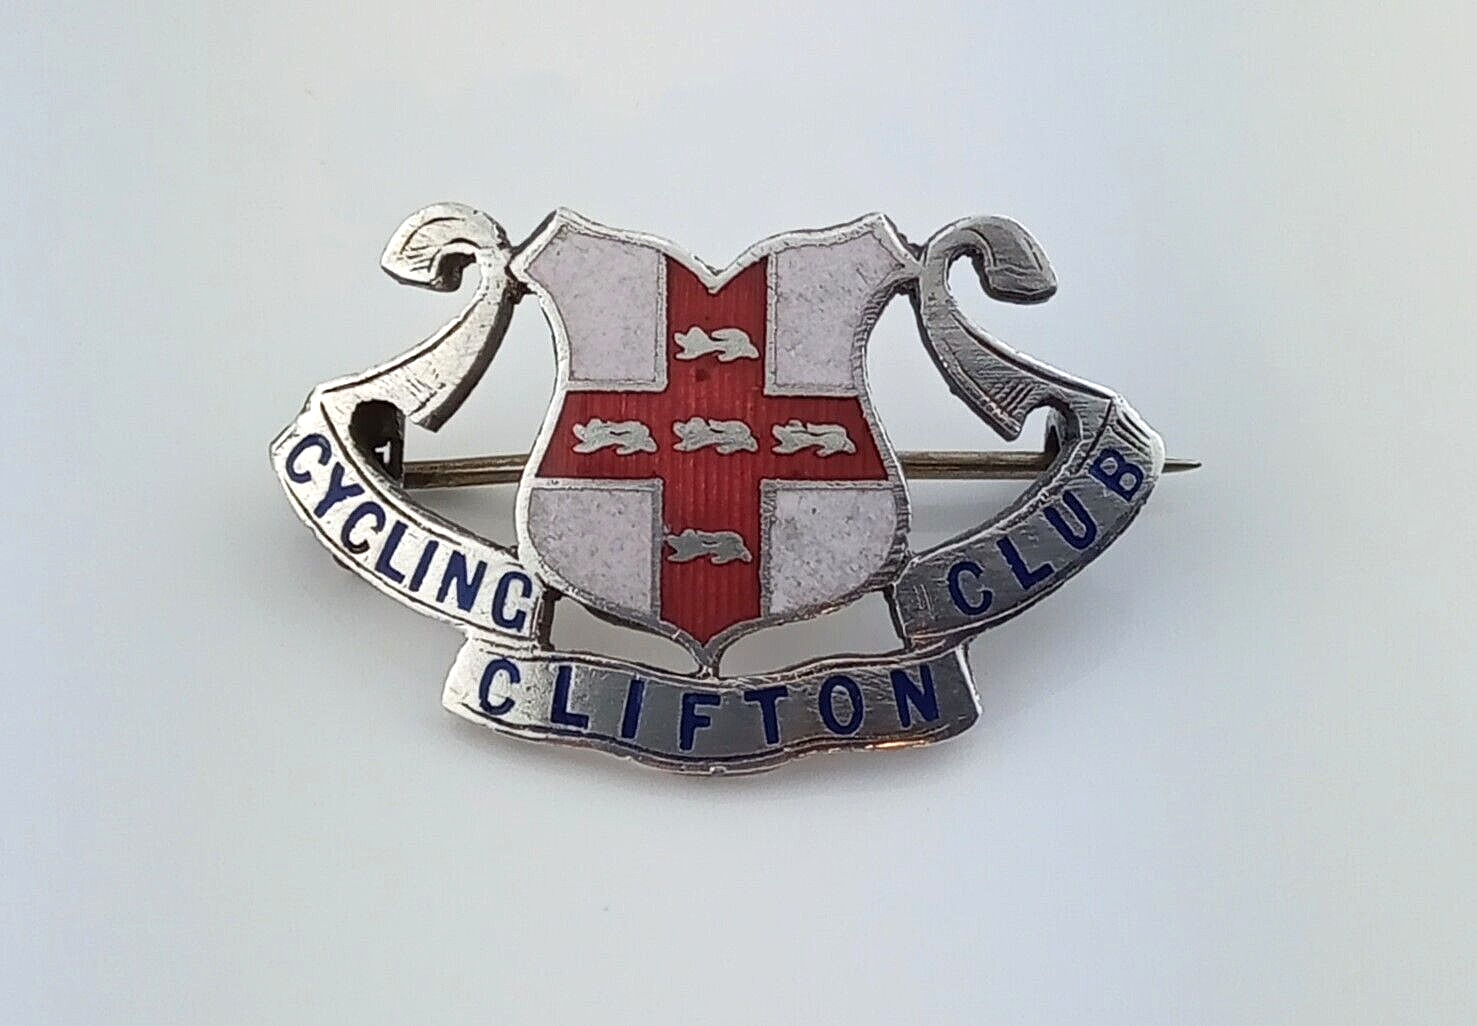 ANTIQUE WHITE METAL & ENAMEL CLIFTON CYCLING CLUB BADGE c1900s VAUGHTON LTD